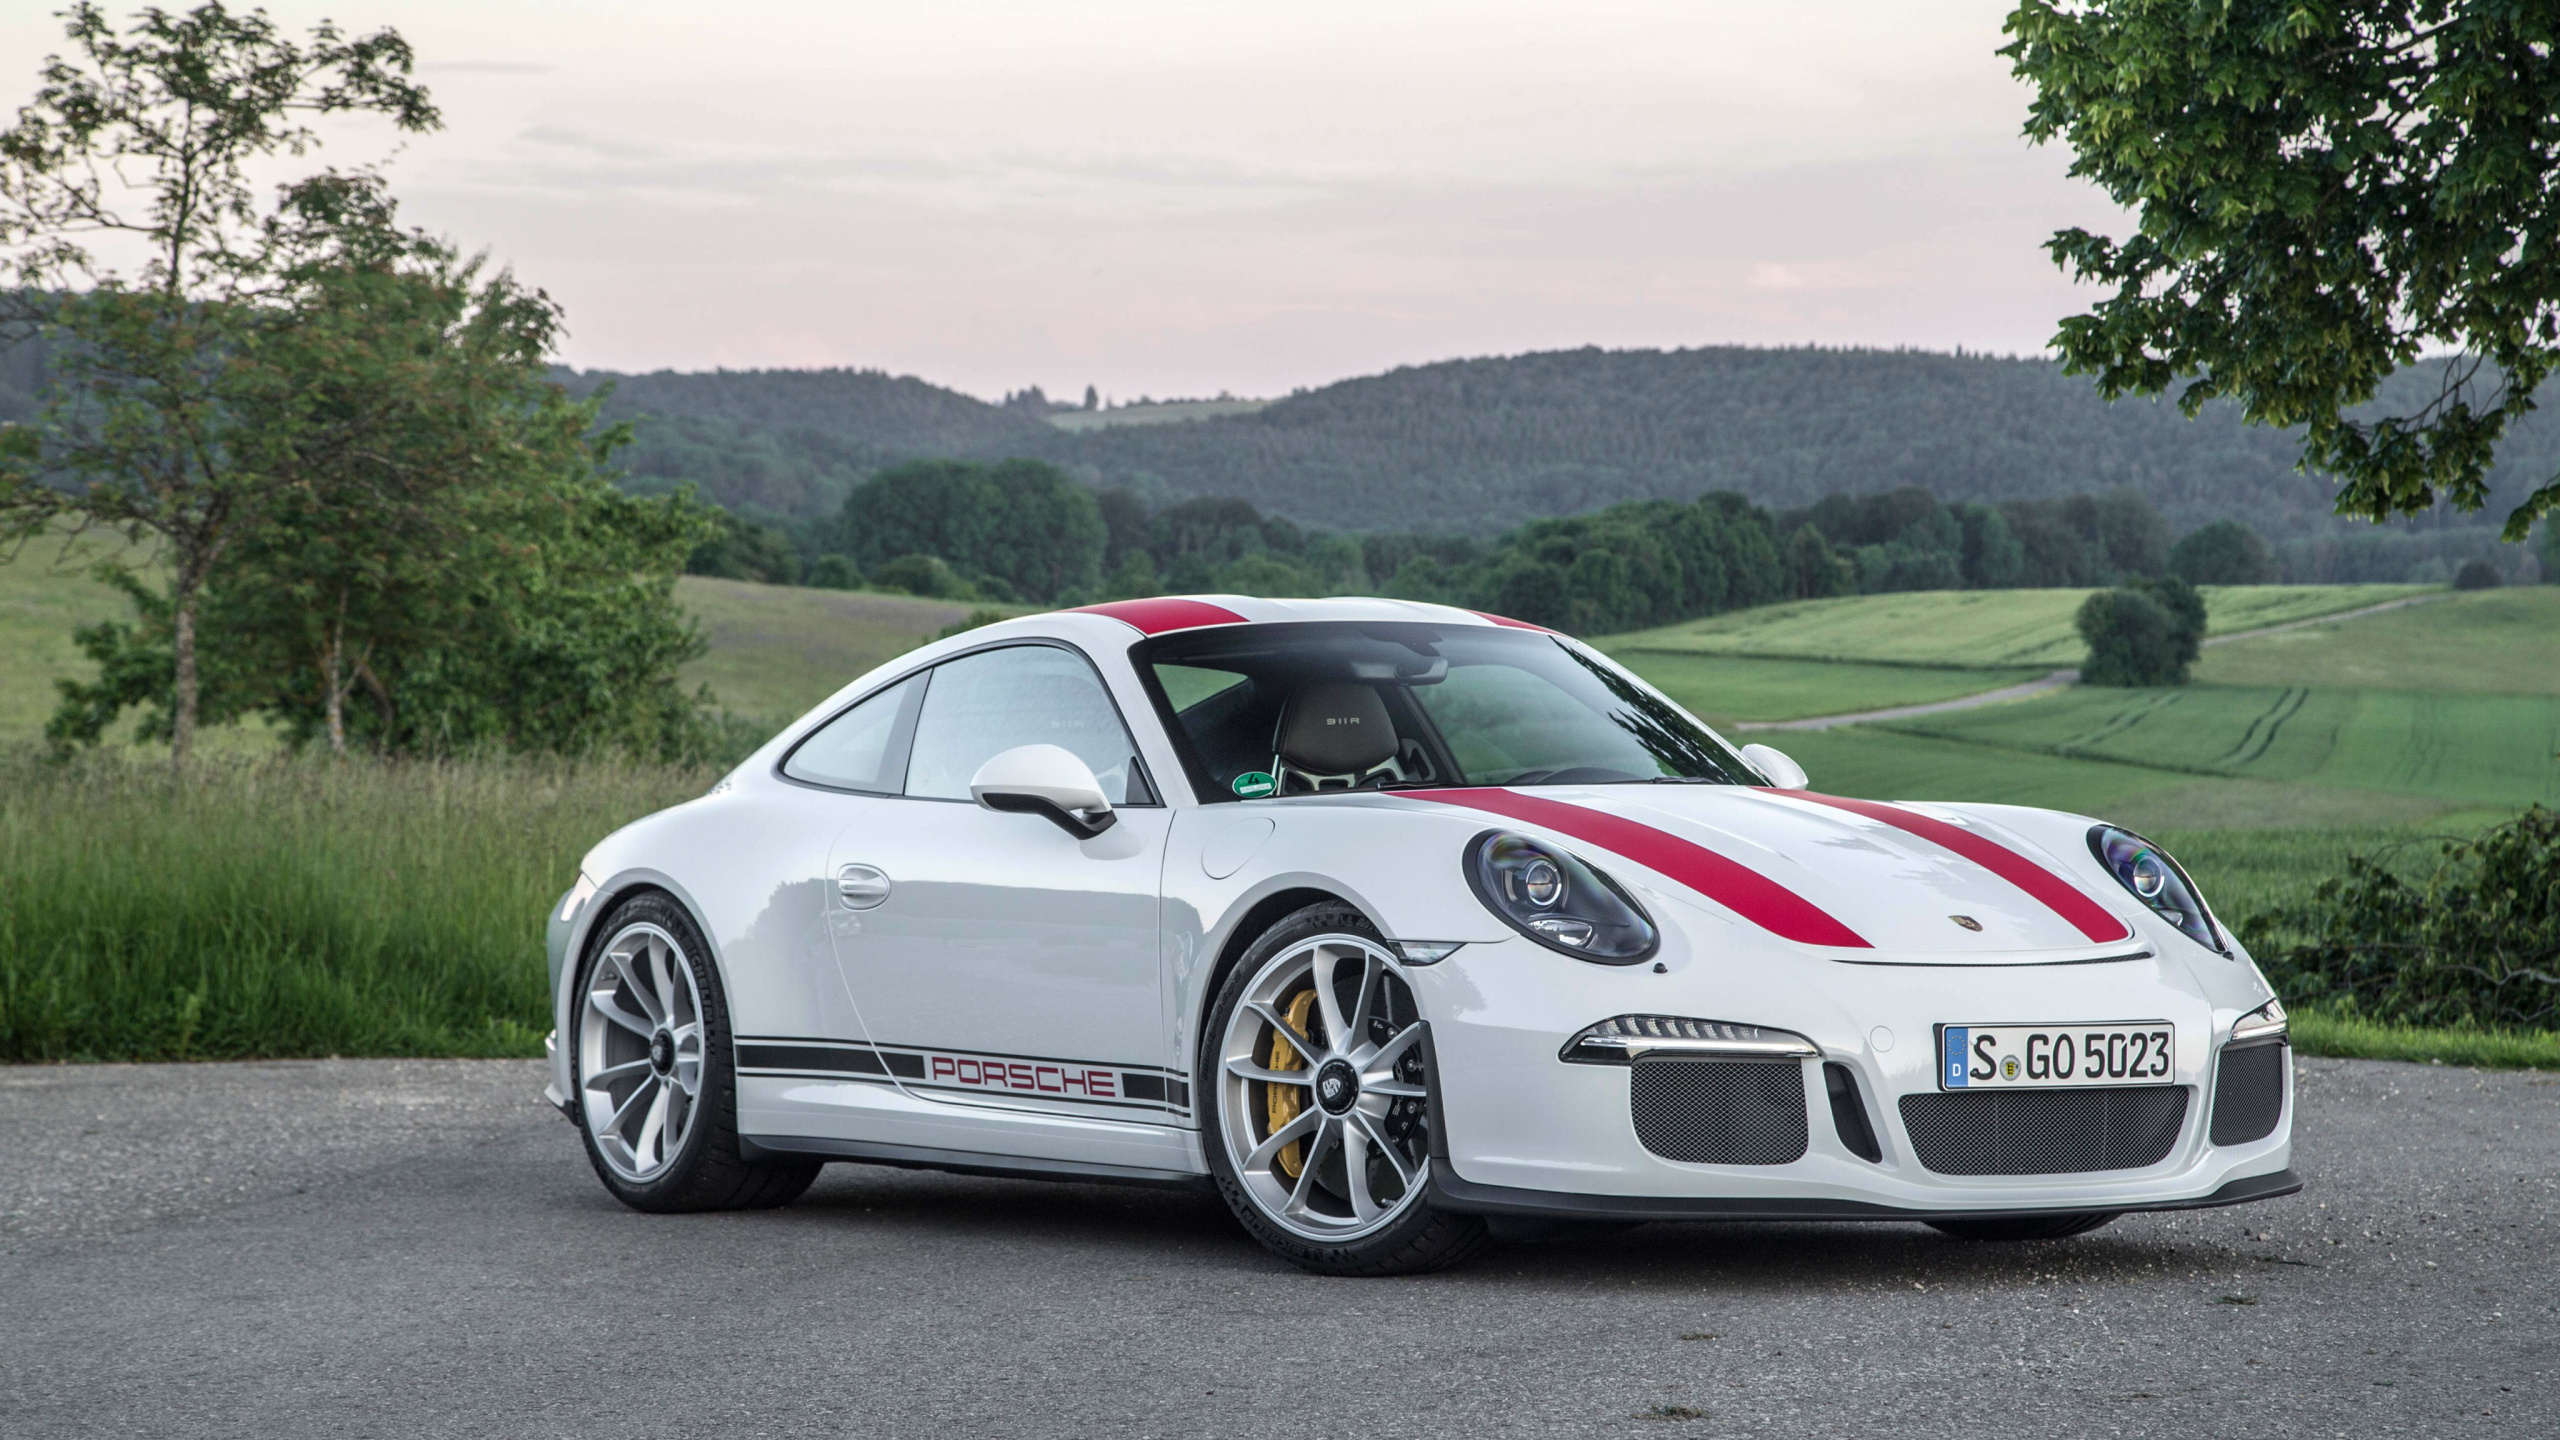 White Porsche 911 on Road During Daytime. Wallpaper in 2560x1440 Resolution